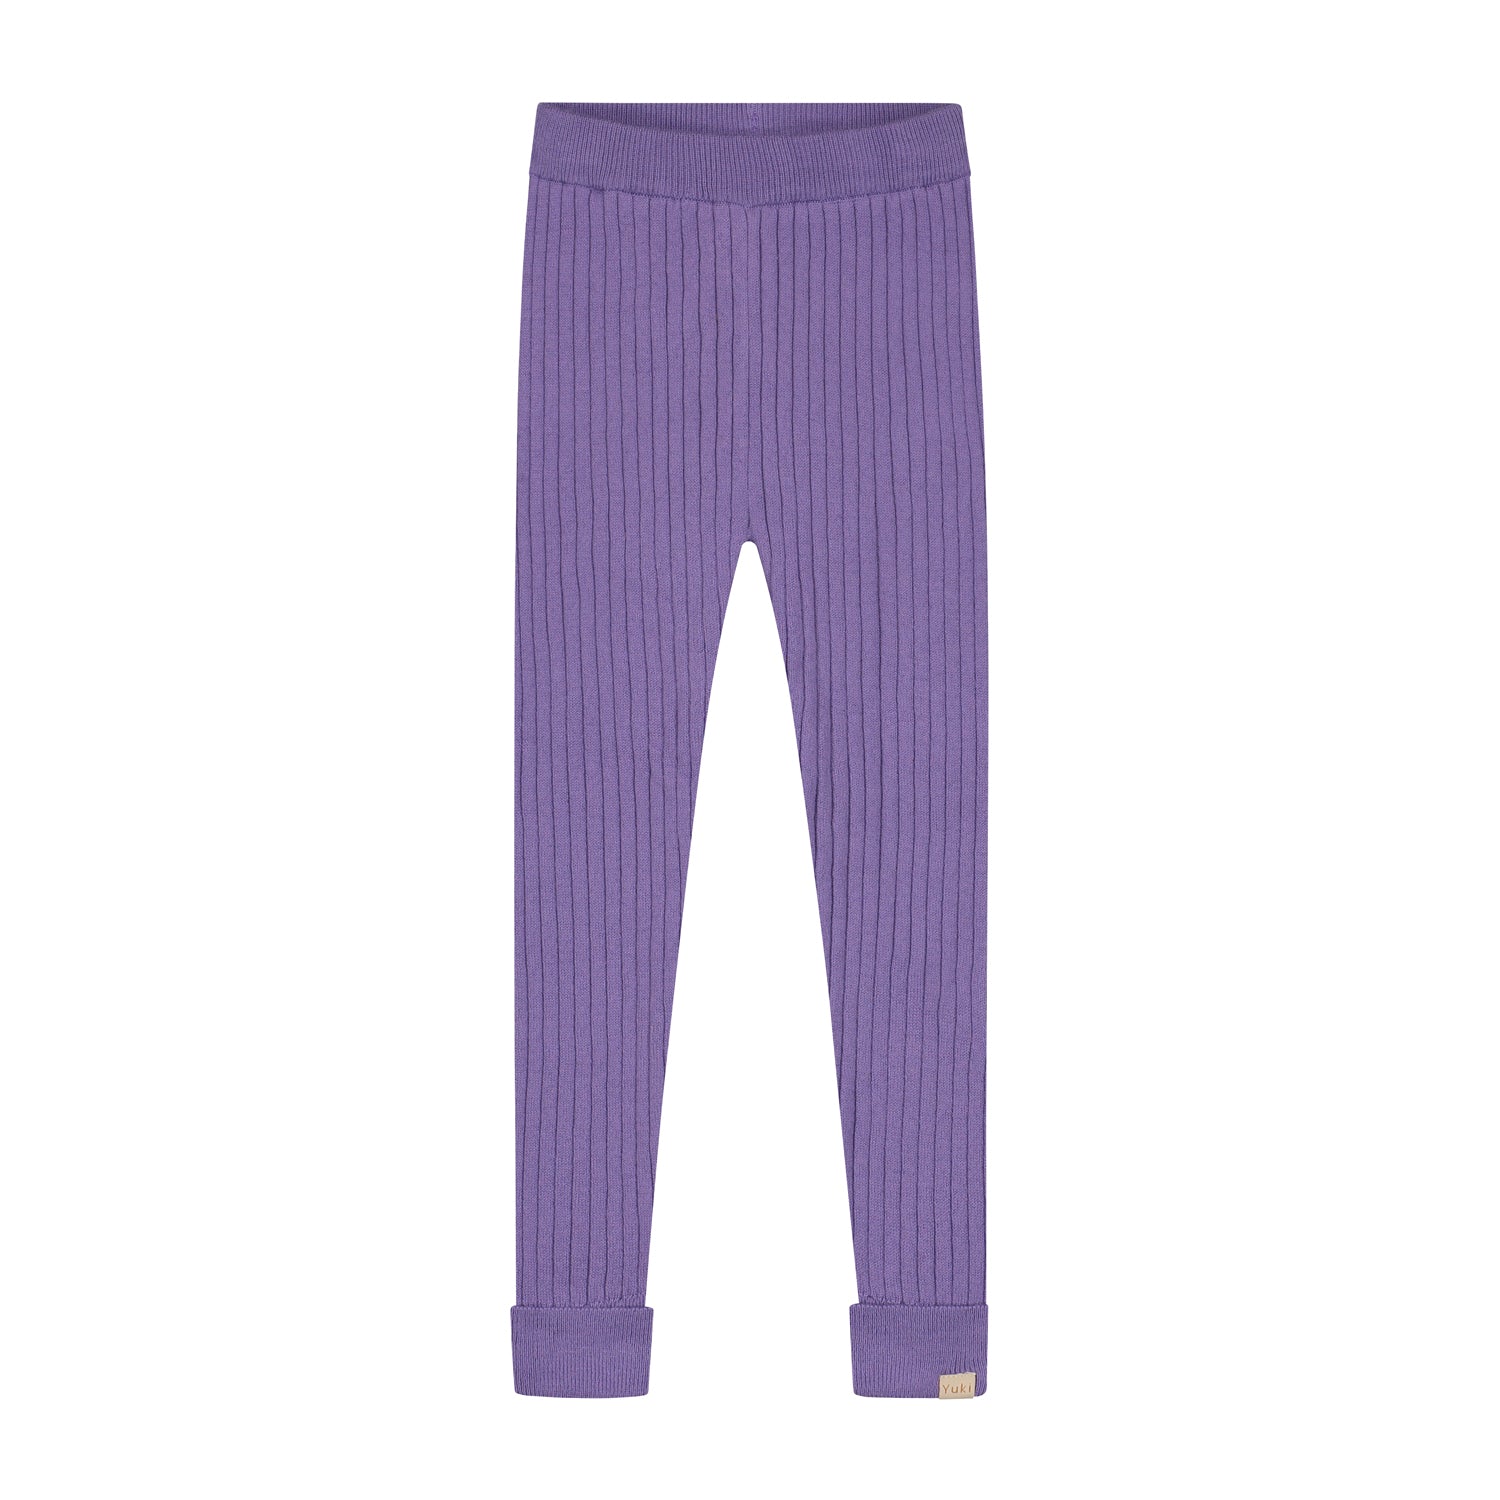 Knitted Legging Big Rib – violet